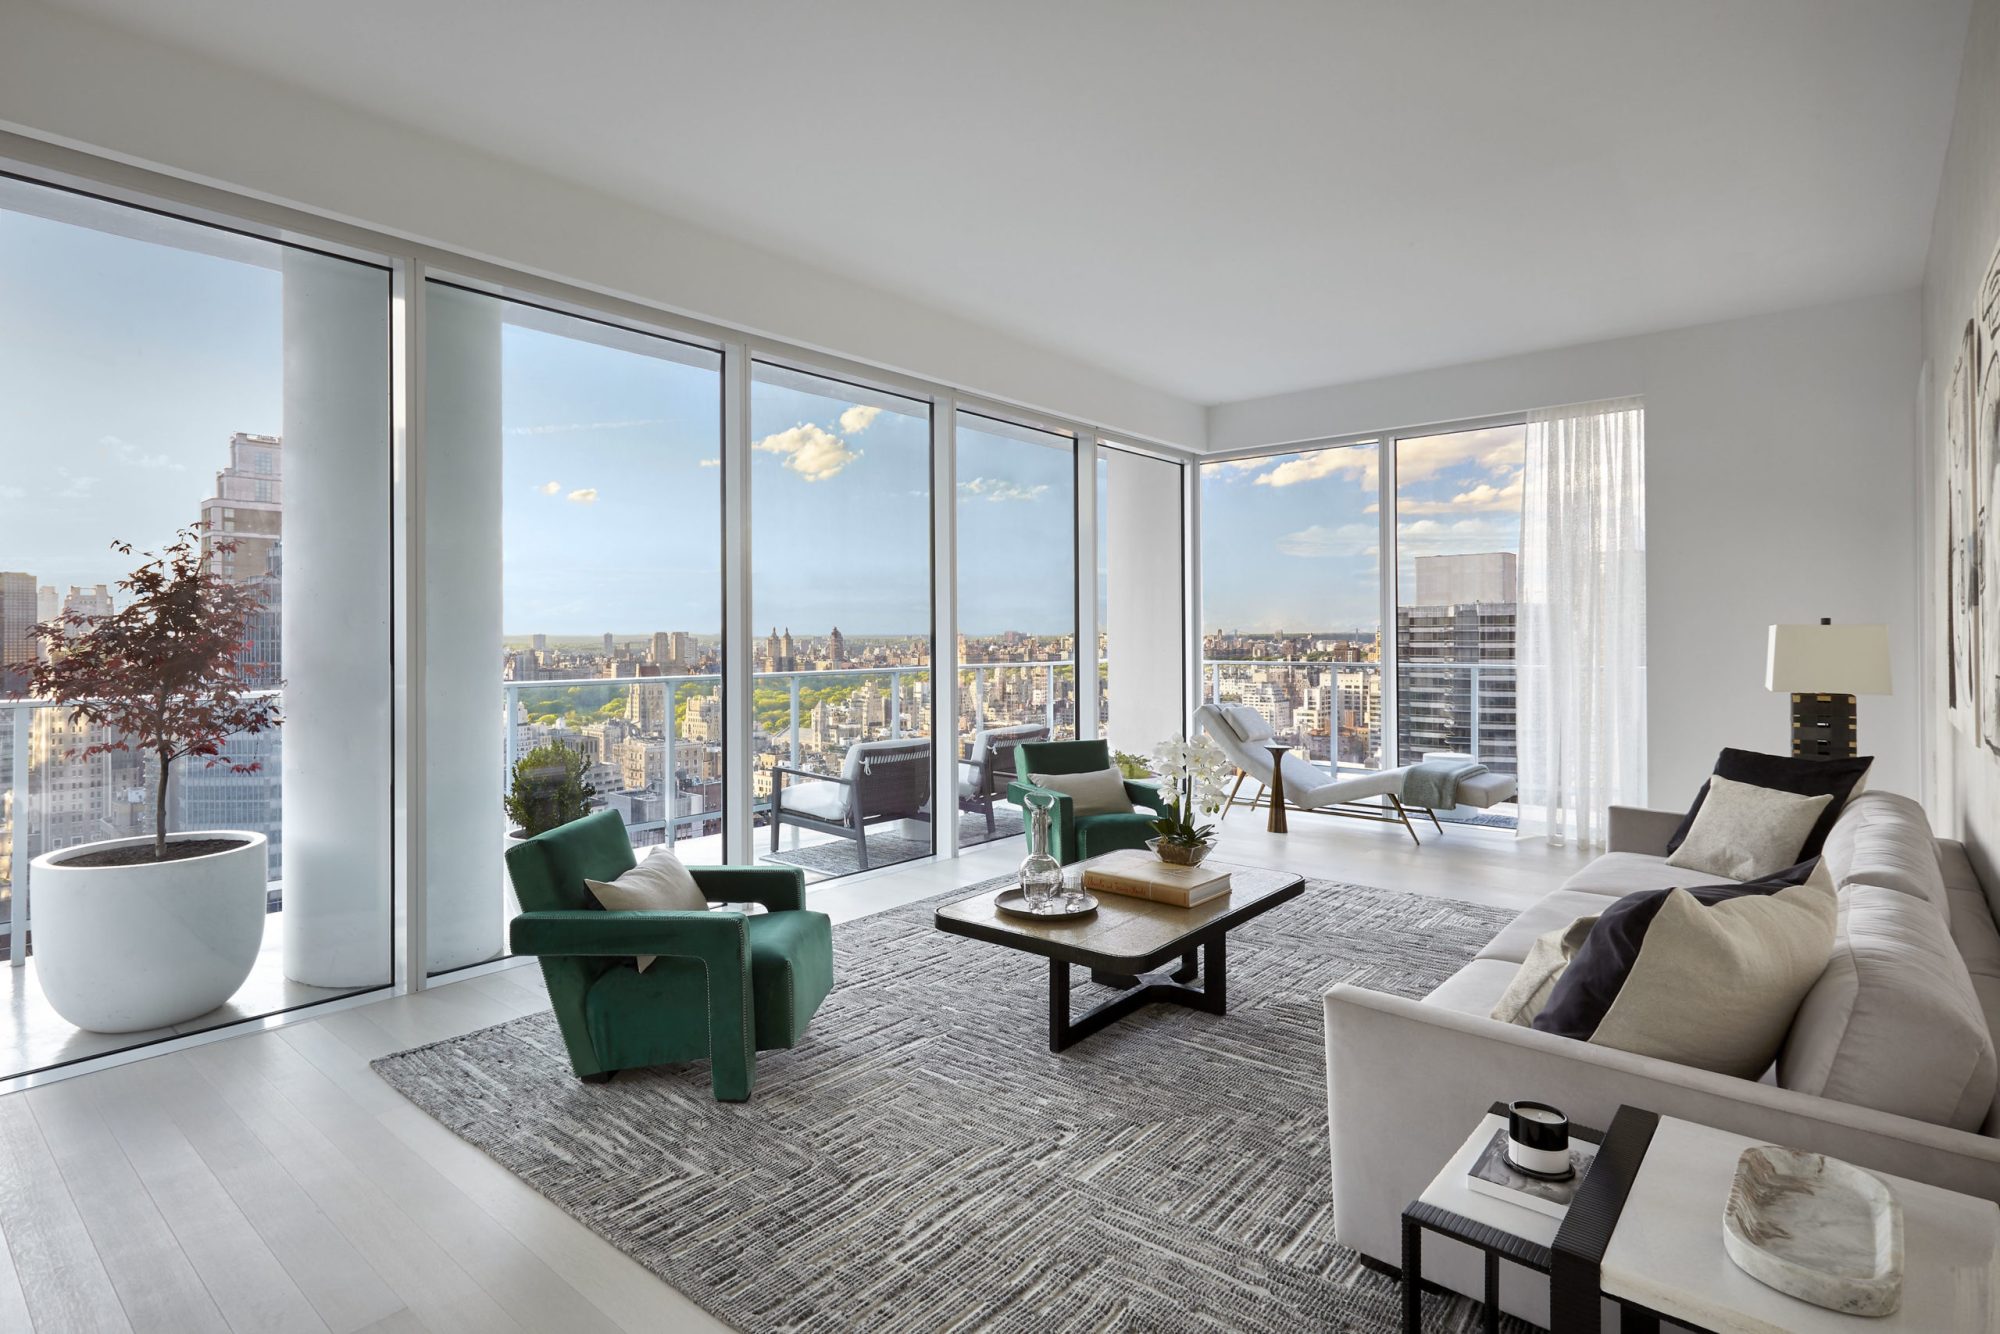 200 East 59th Street brings indoor-outdoor living in the heart of Manhattan